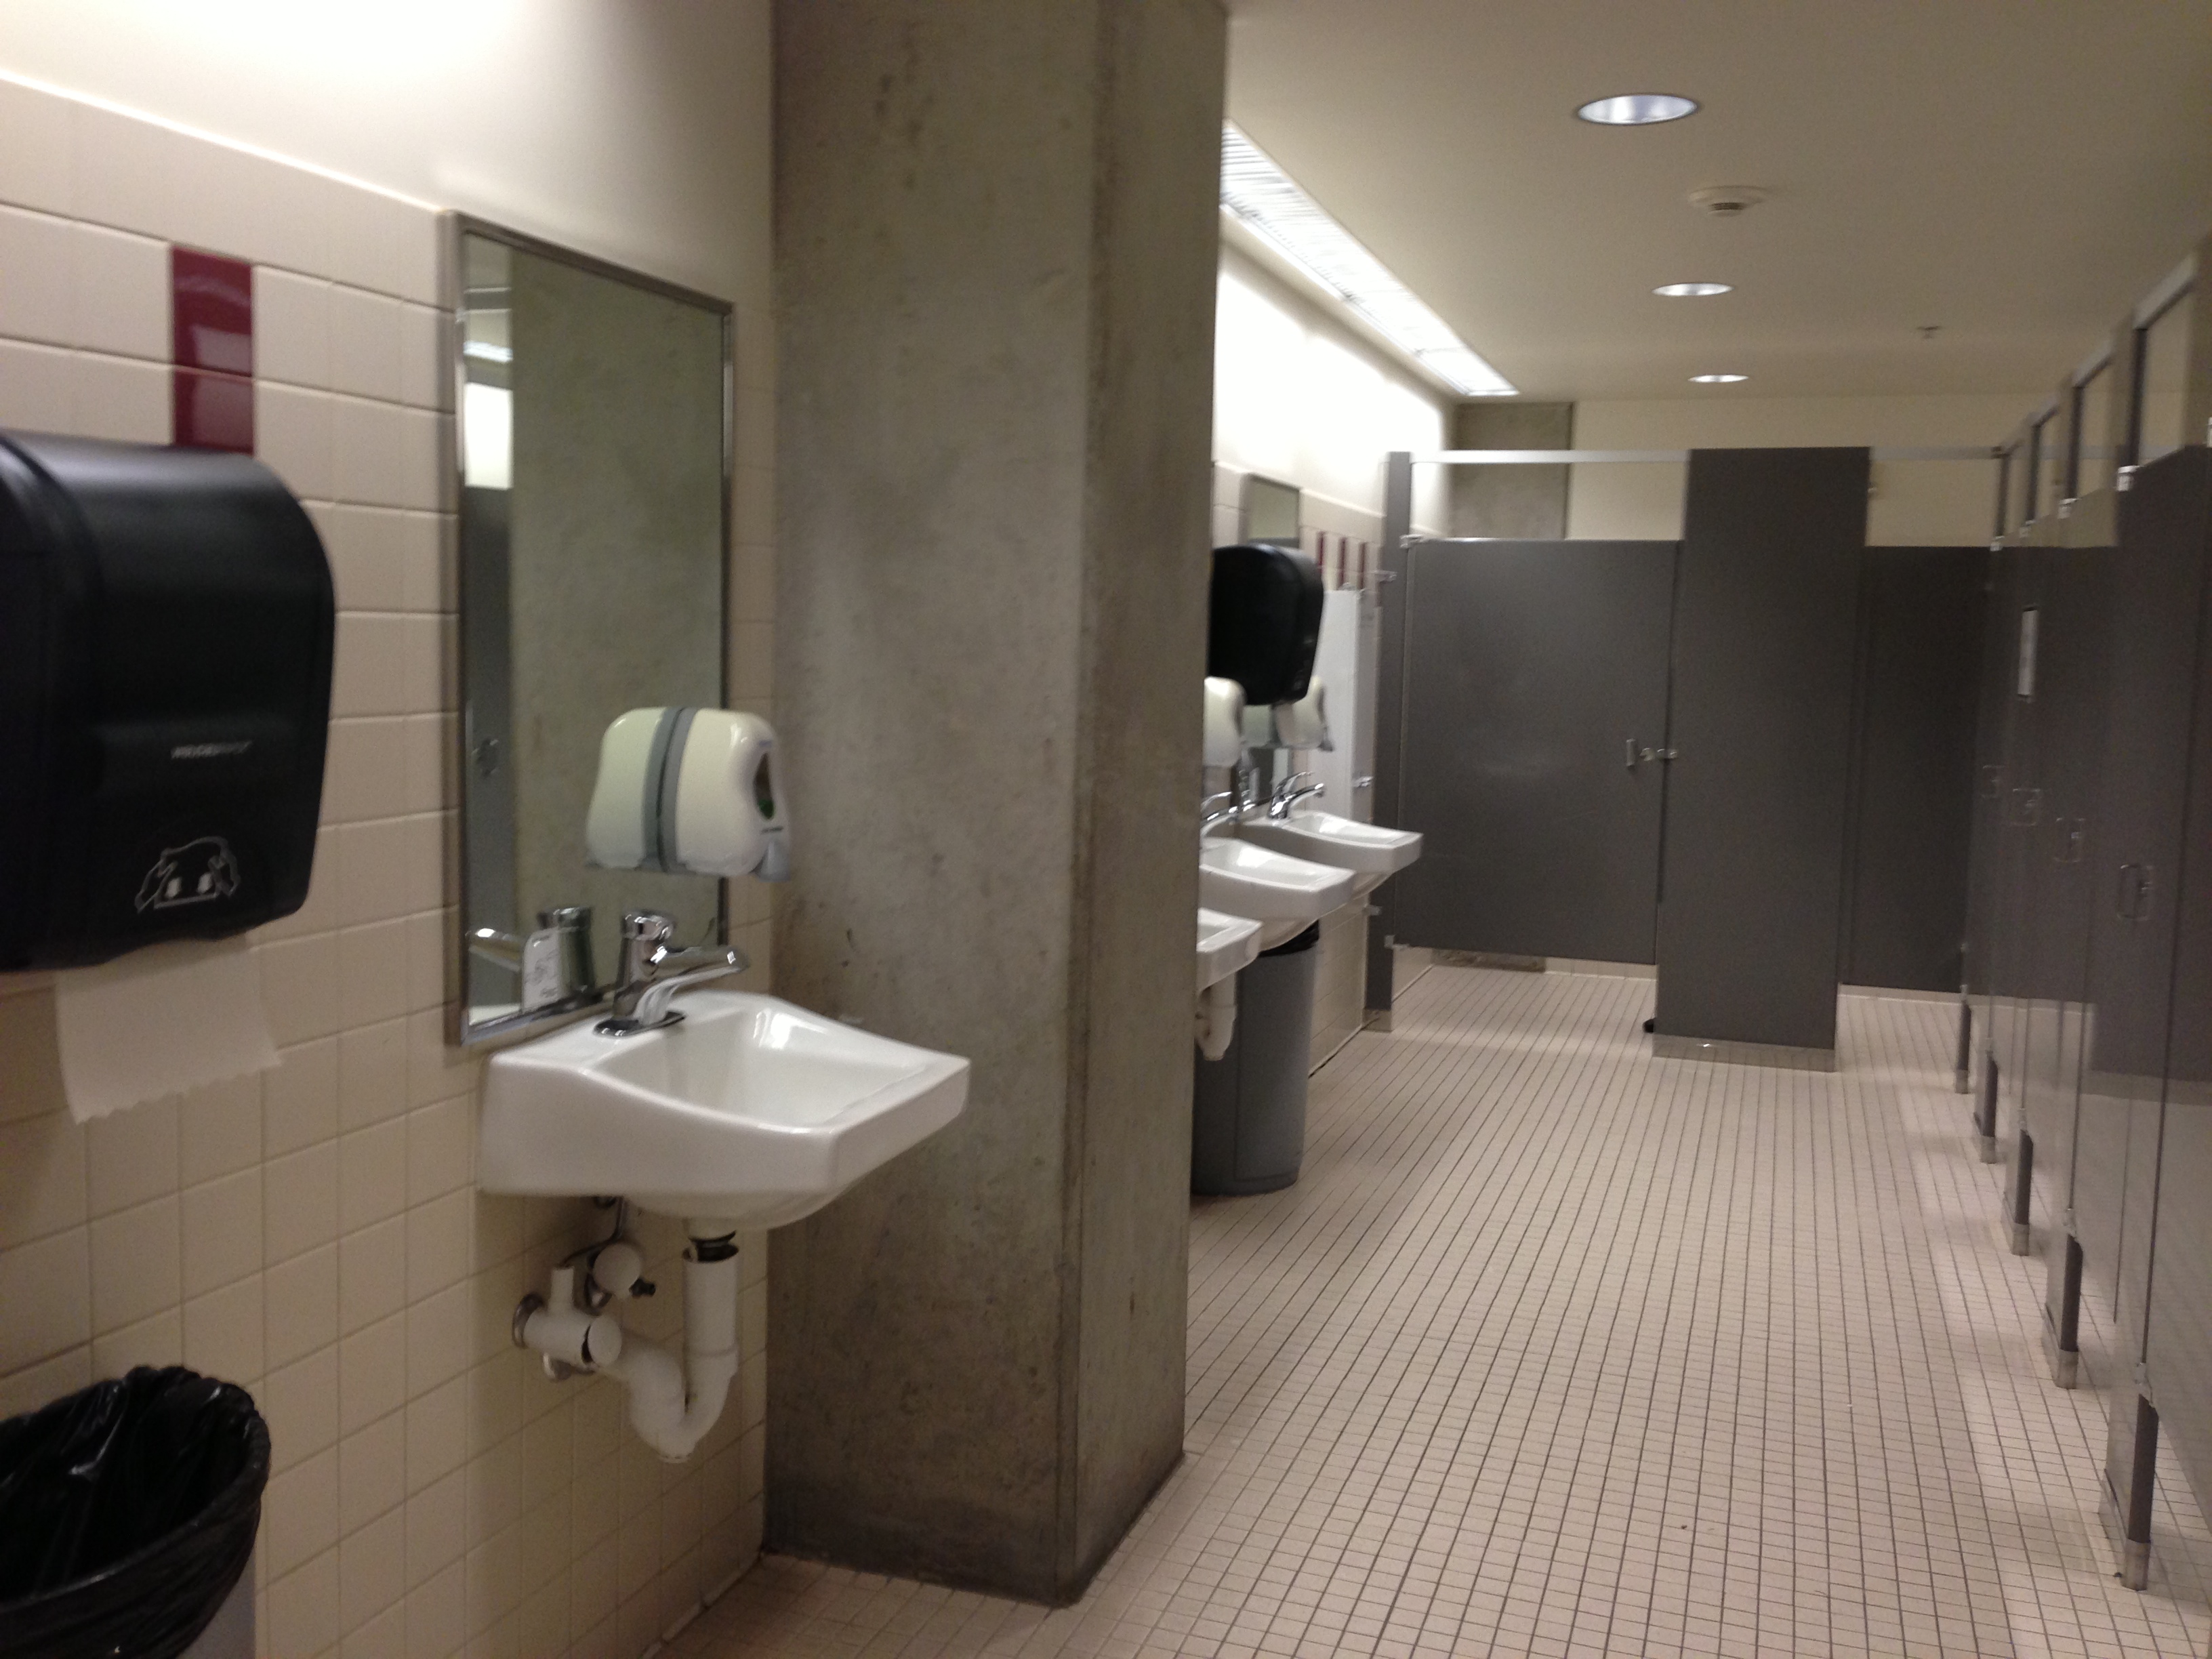 Public restroom ebony photo